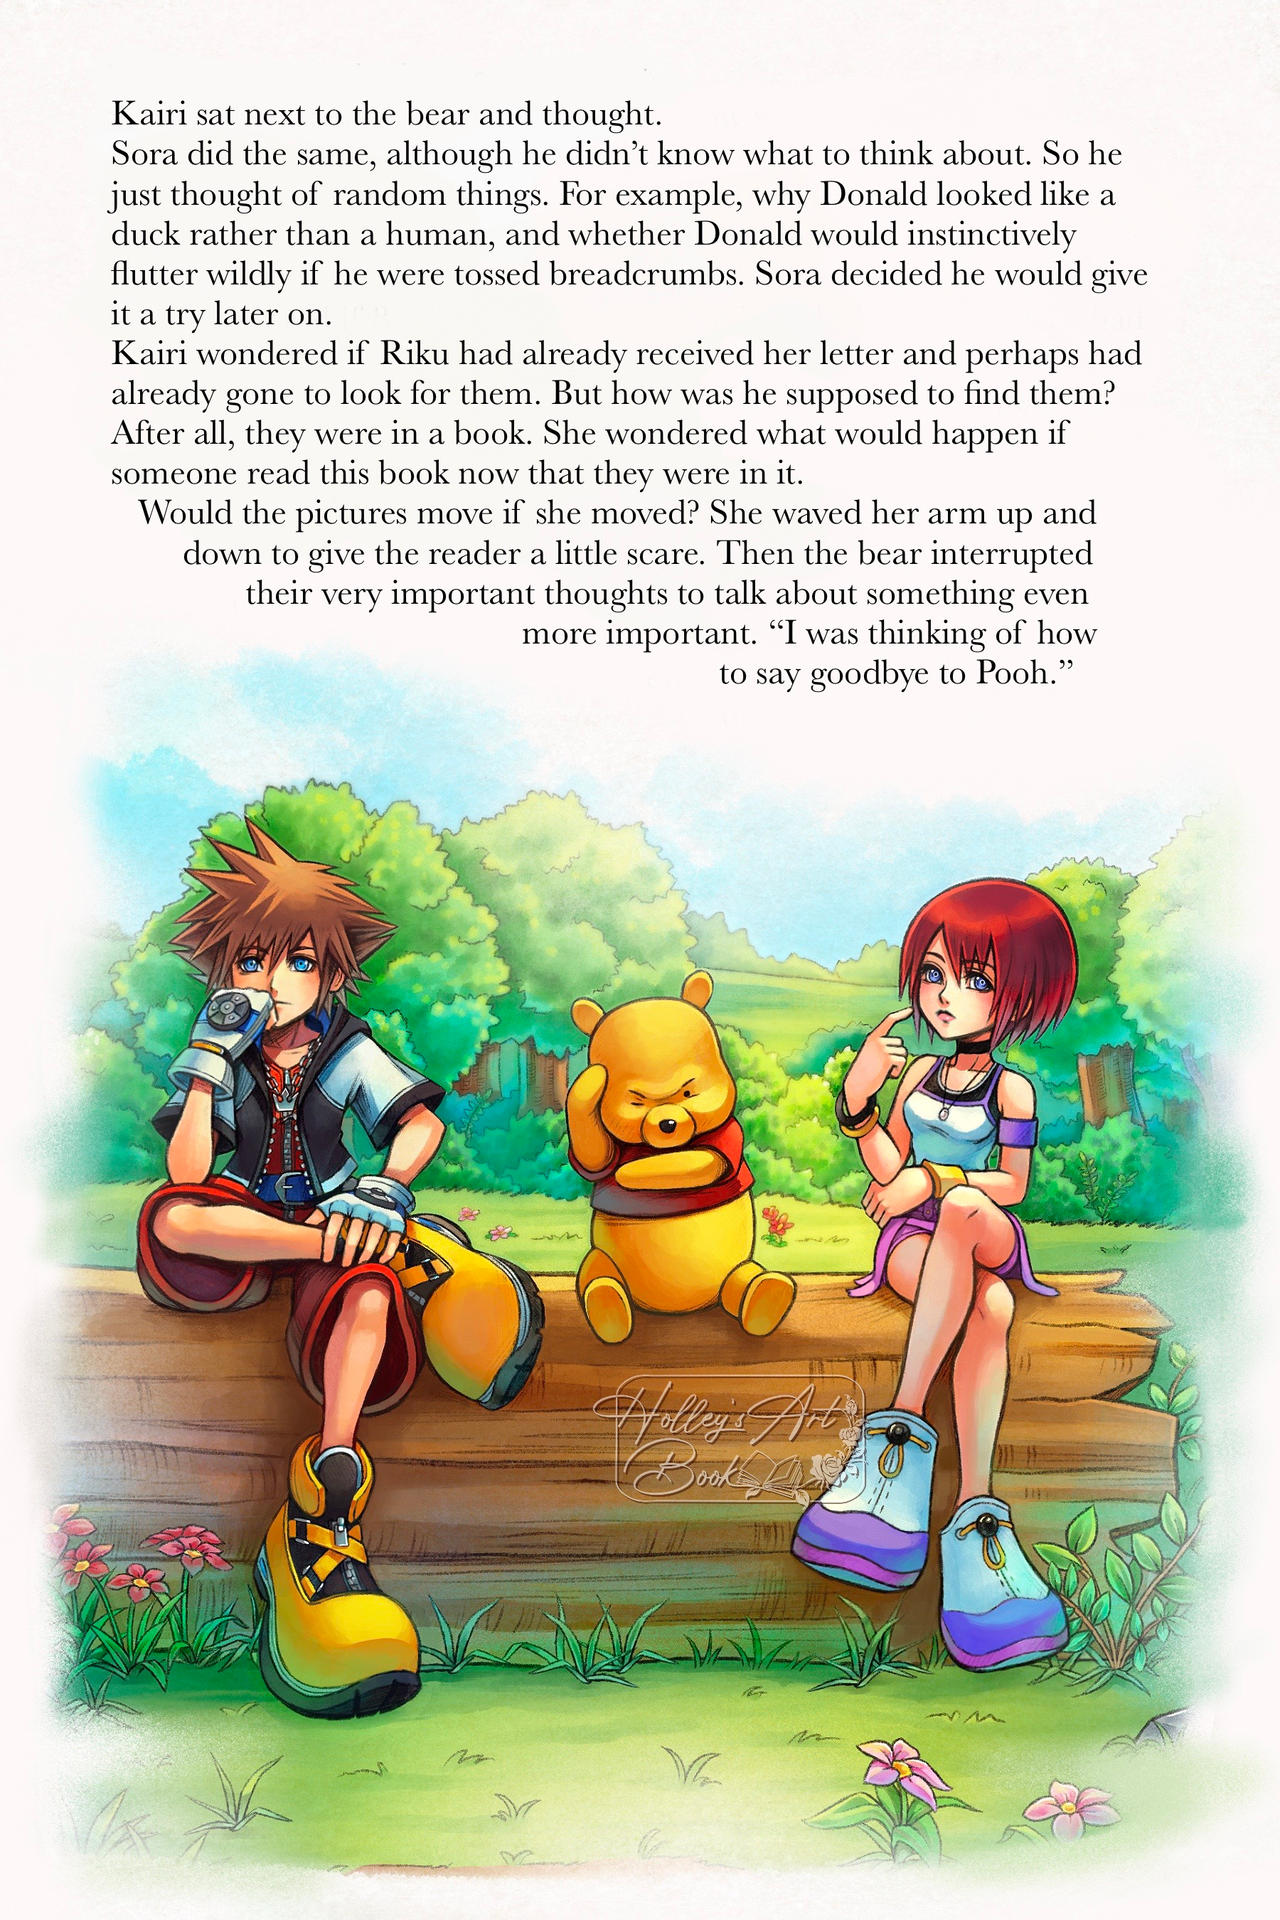 Kingdom Hearts 2 Ending Sora and Kairi by HolleysArt on DeviantArt